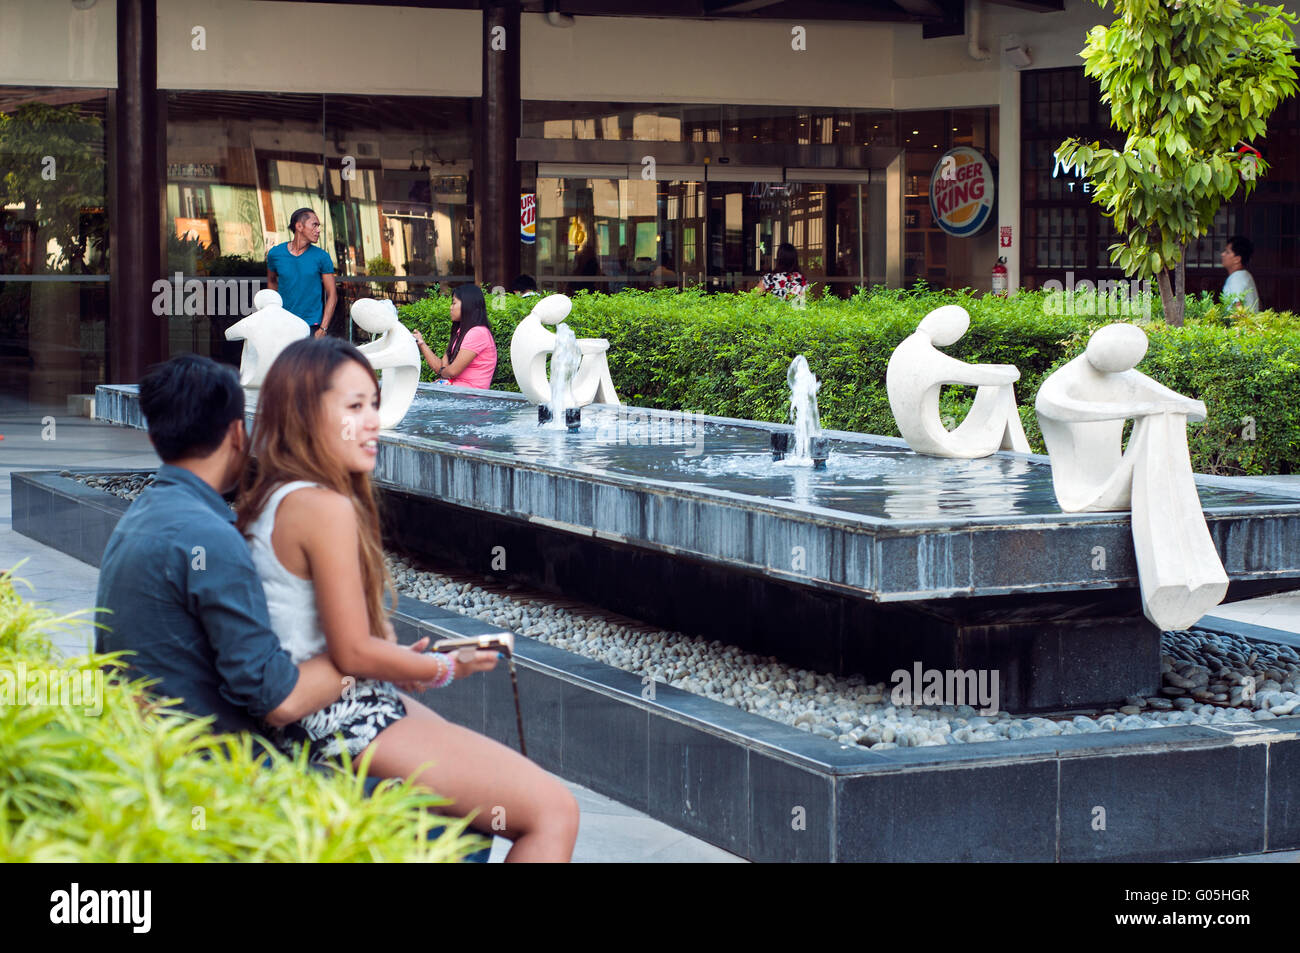 3rd floor open air garden terrace and sculptures, Ayala Shopping Mall, Cebu City, Philippines Stock Photo